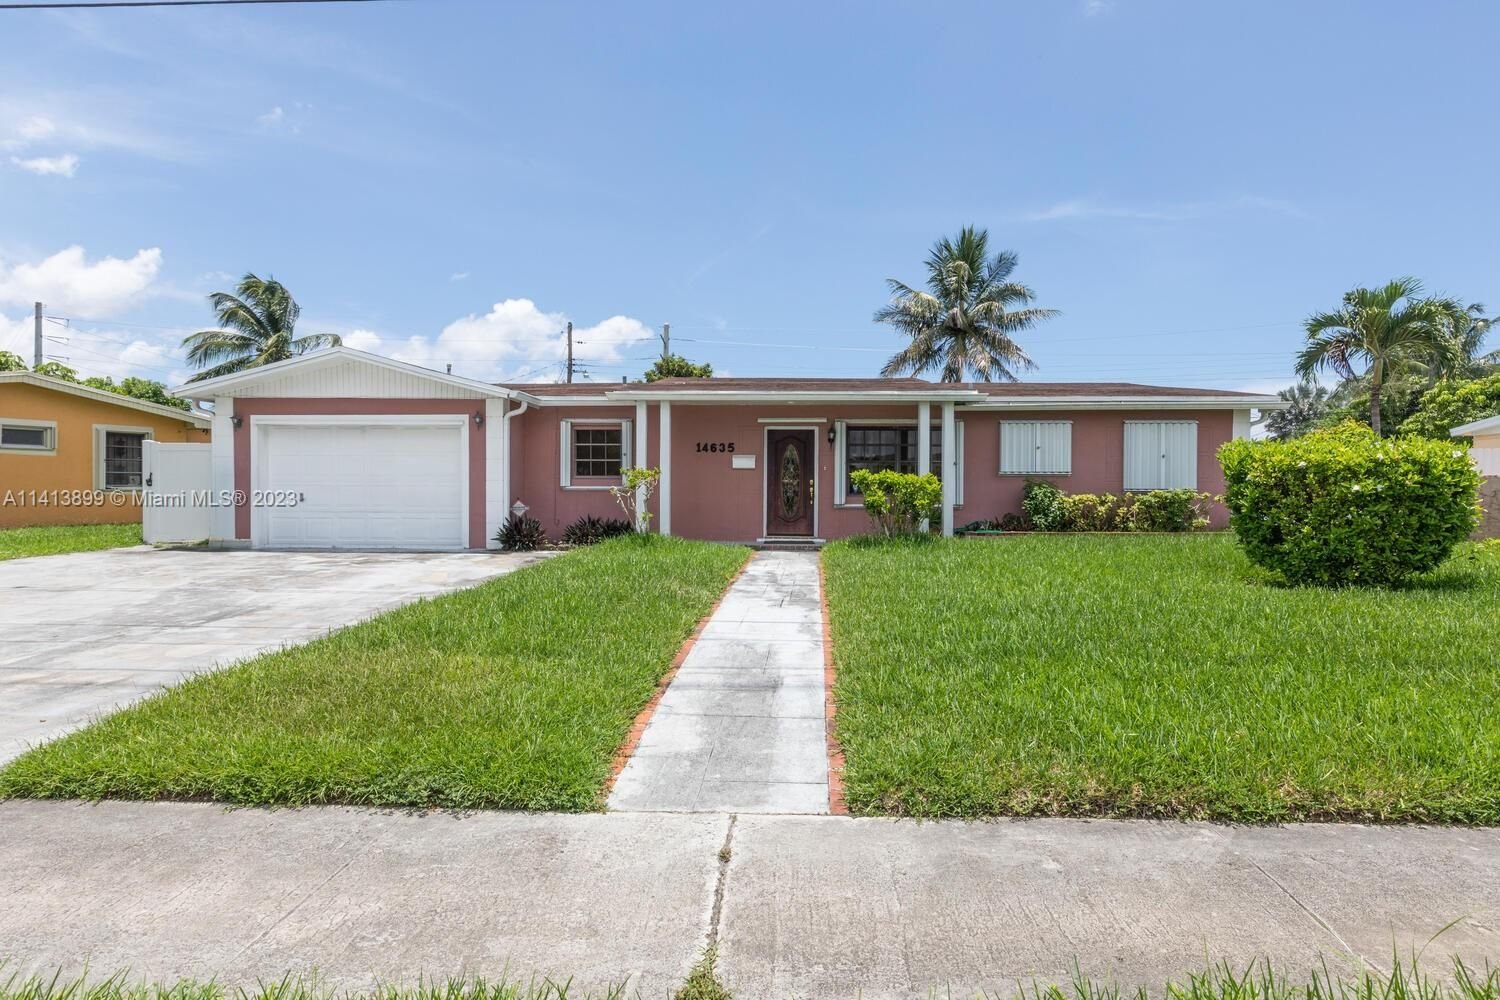 Real estate property located at 14635 107th Ave, Miami-Dade County, Miami, FL